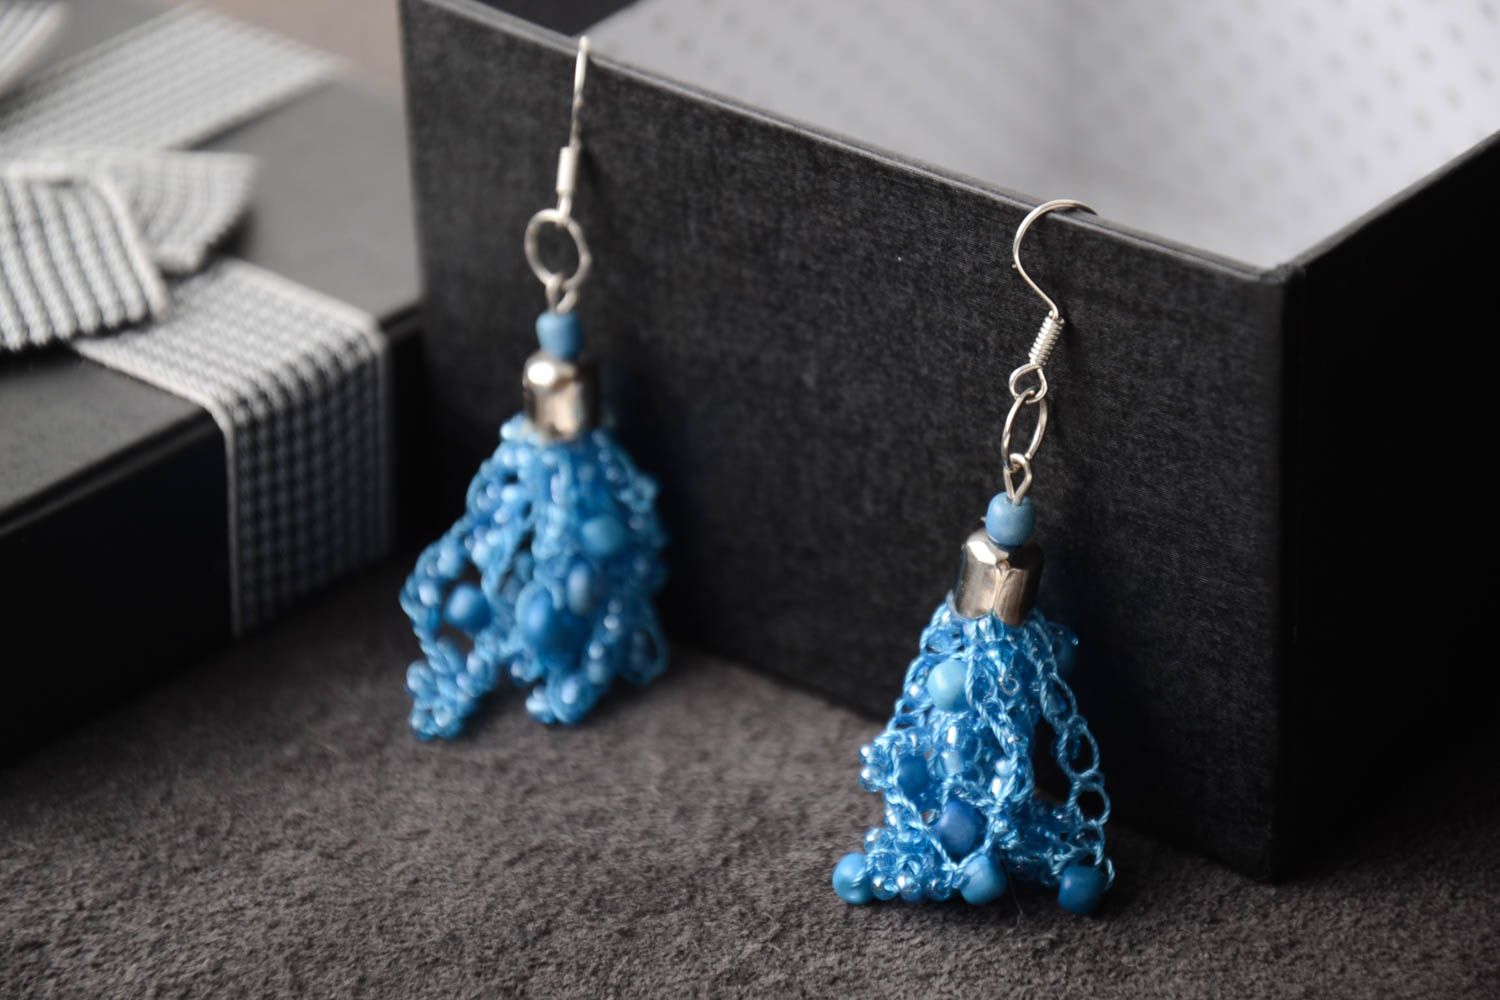 Blue handmade beaded earrings cute earrings cool accessories for girls photo 1